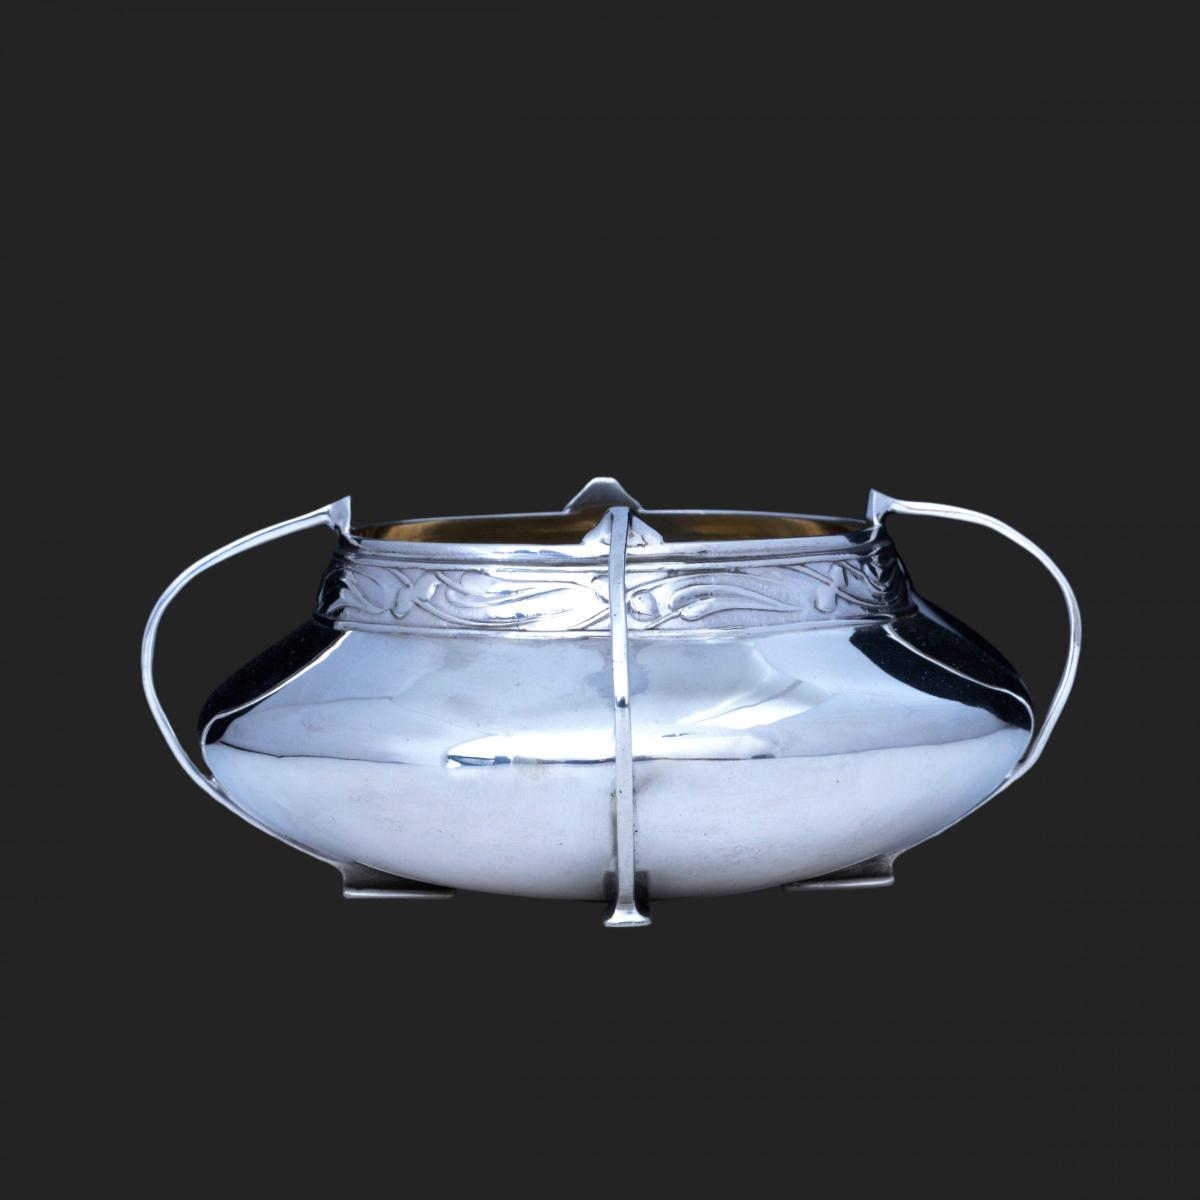 Archibald Knox Liberty Cymric silver bowl